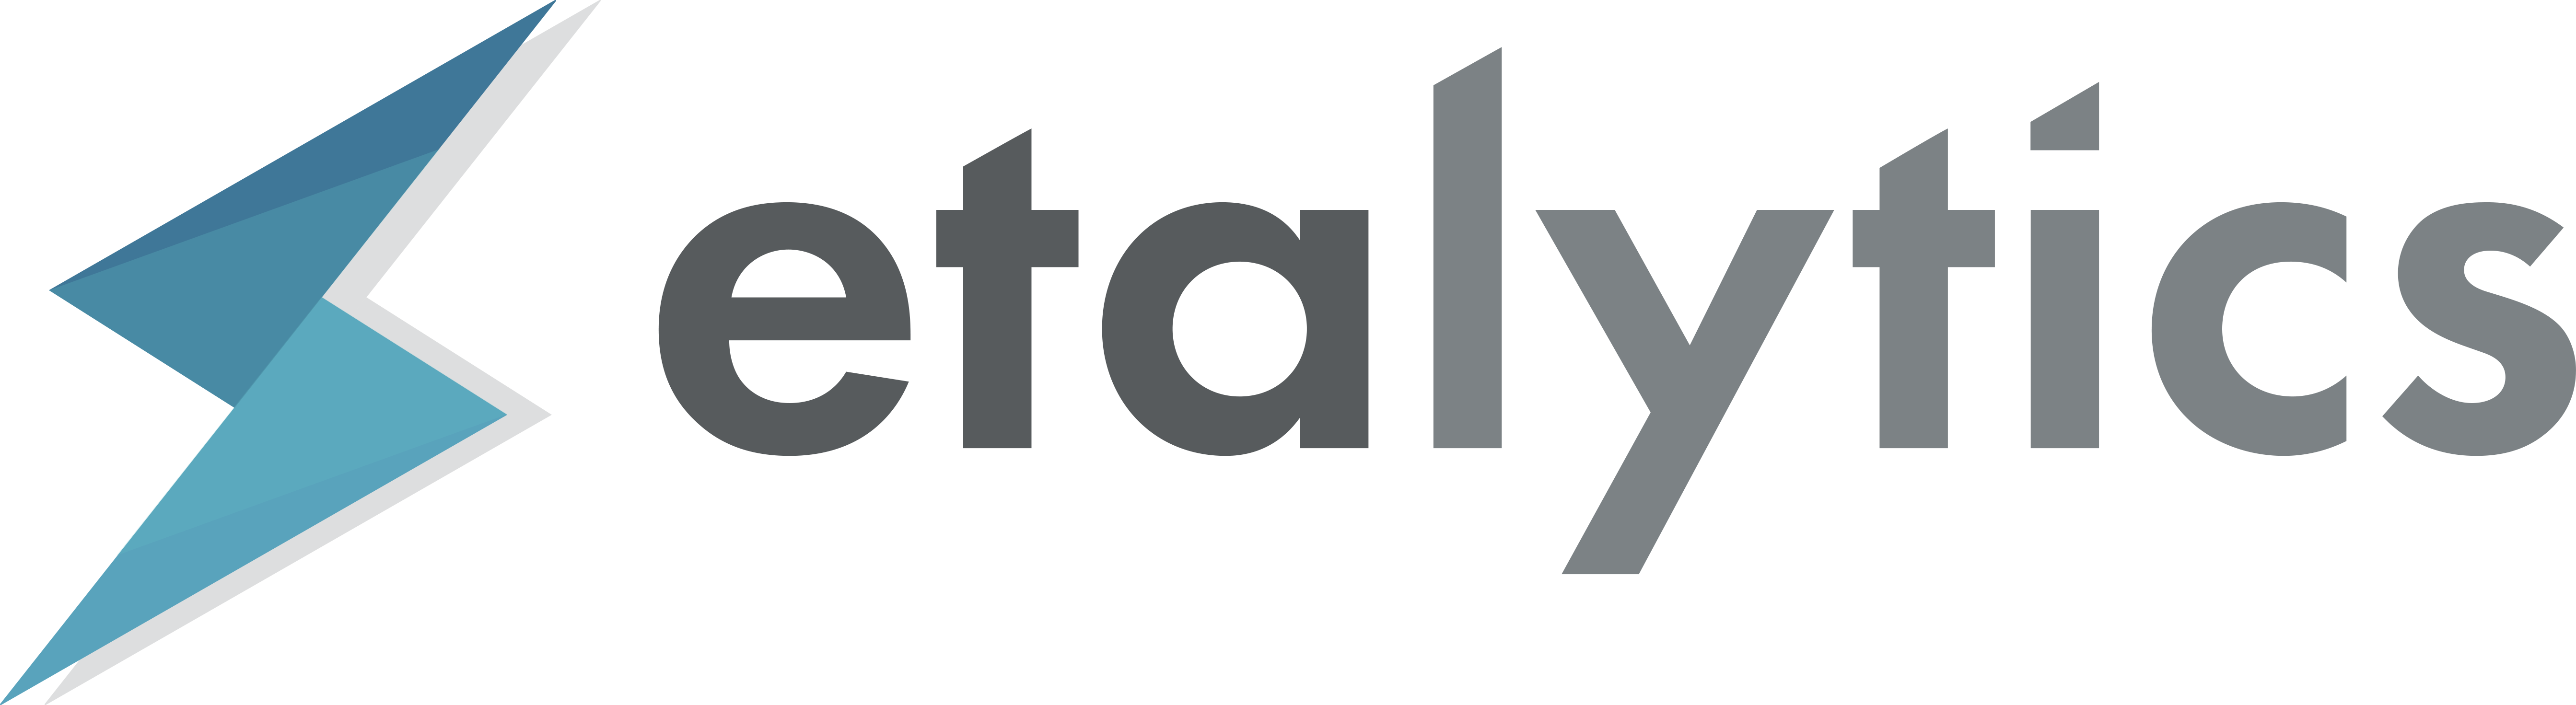 Logo etalytics GmbH